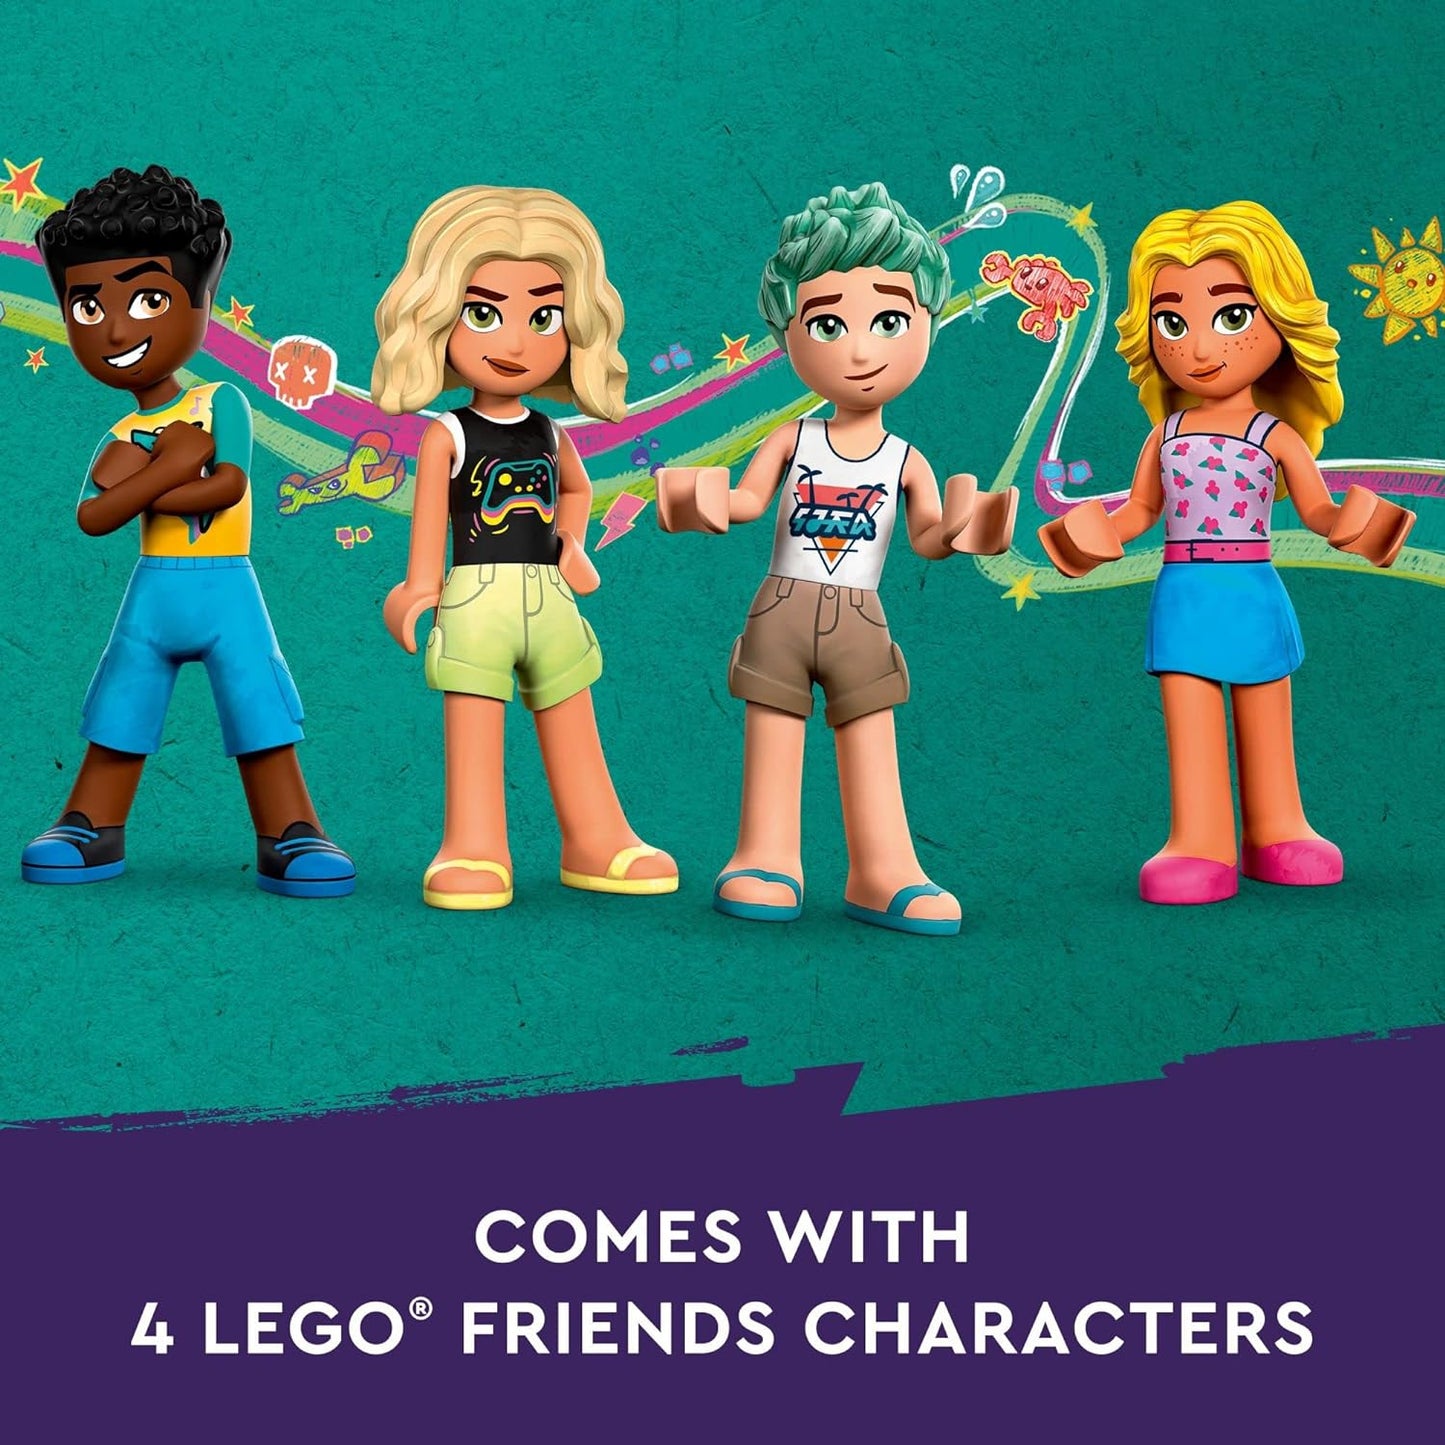 LEGO Friends - Beach Amusement Park 41737